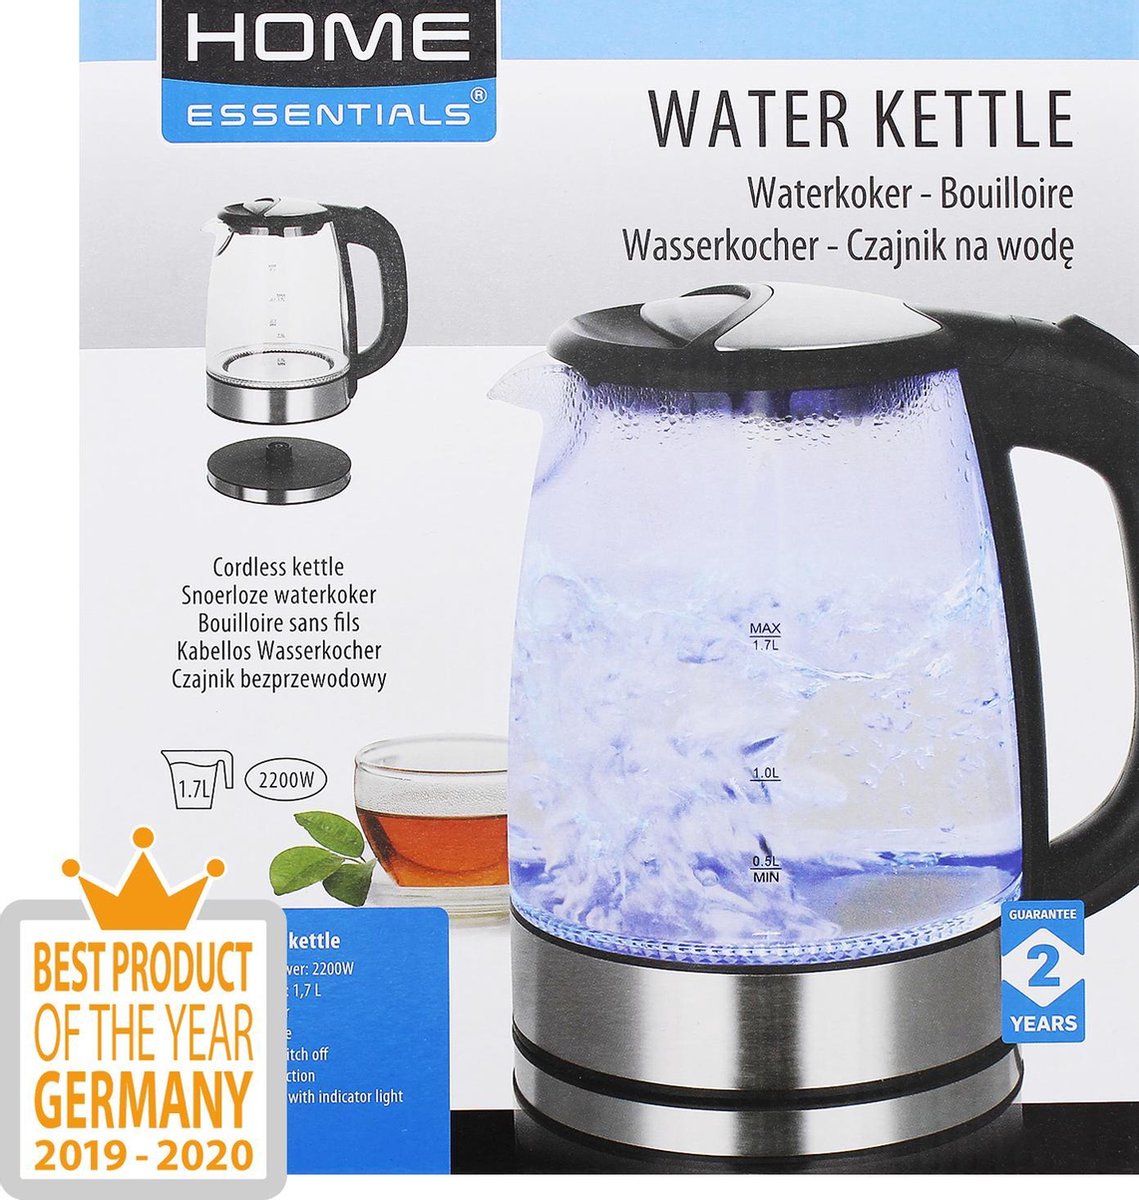 Home Essentials glazen waterkoker - 1,7 liter - Beste product 2019/2020